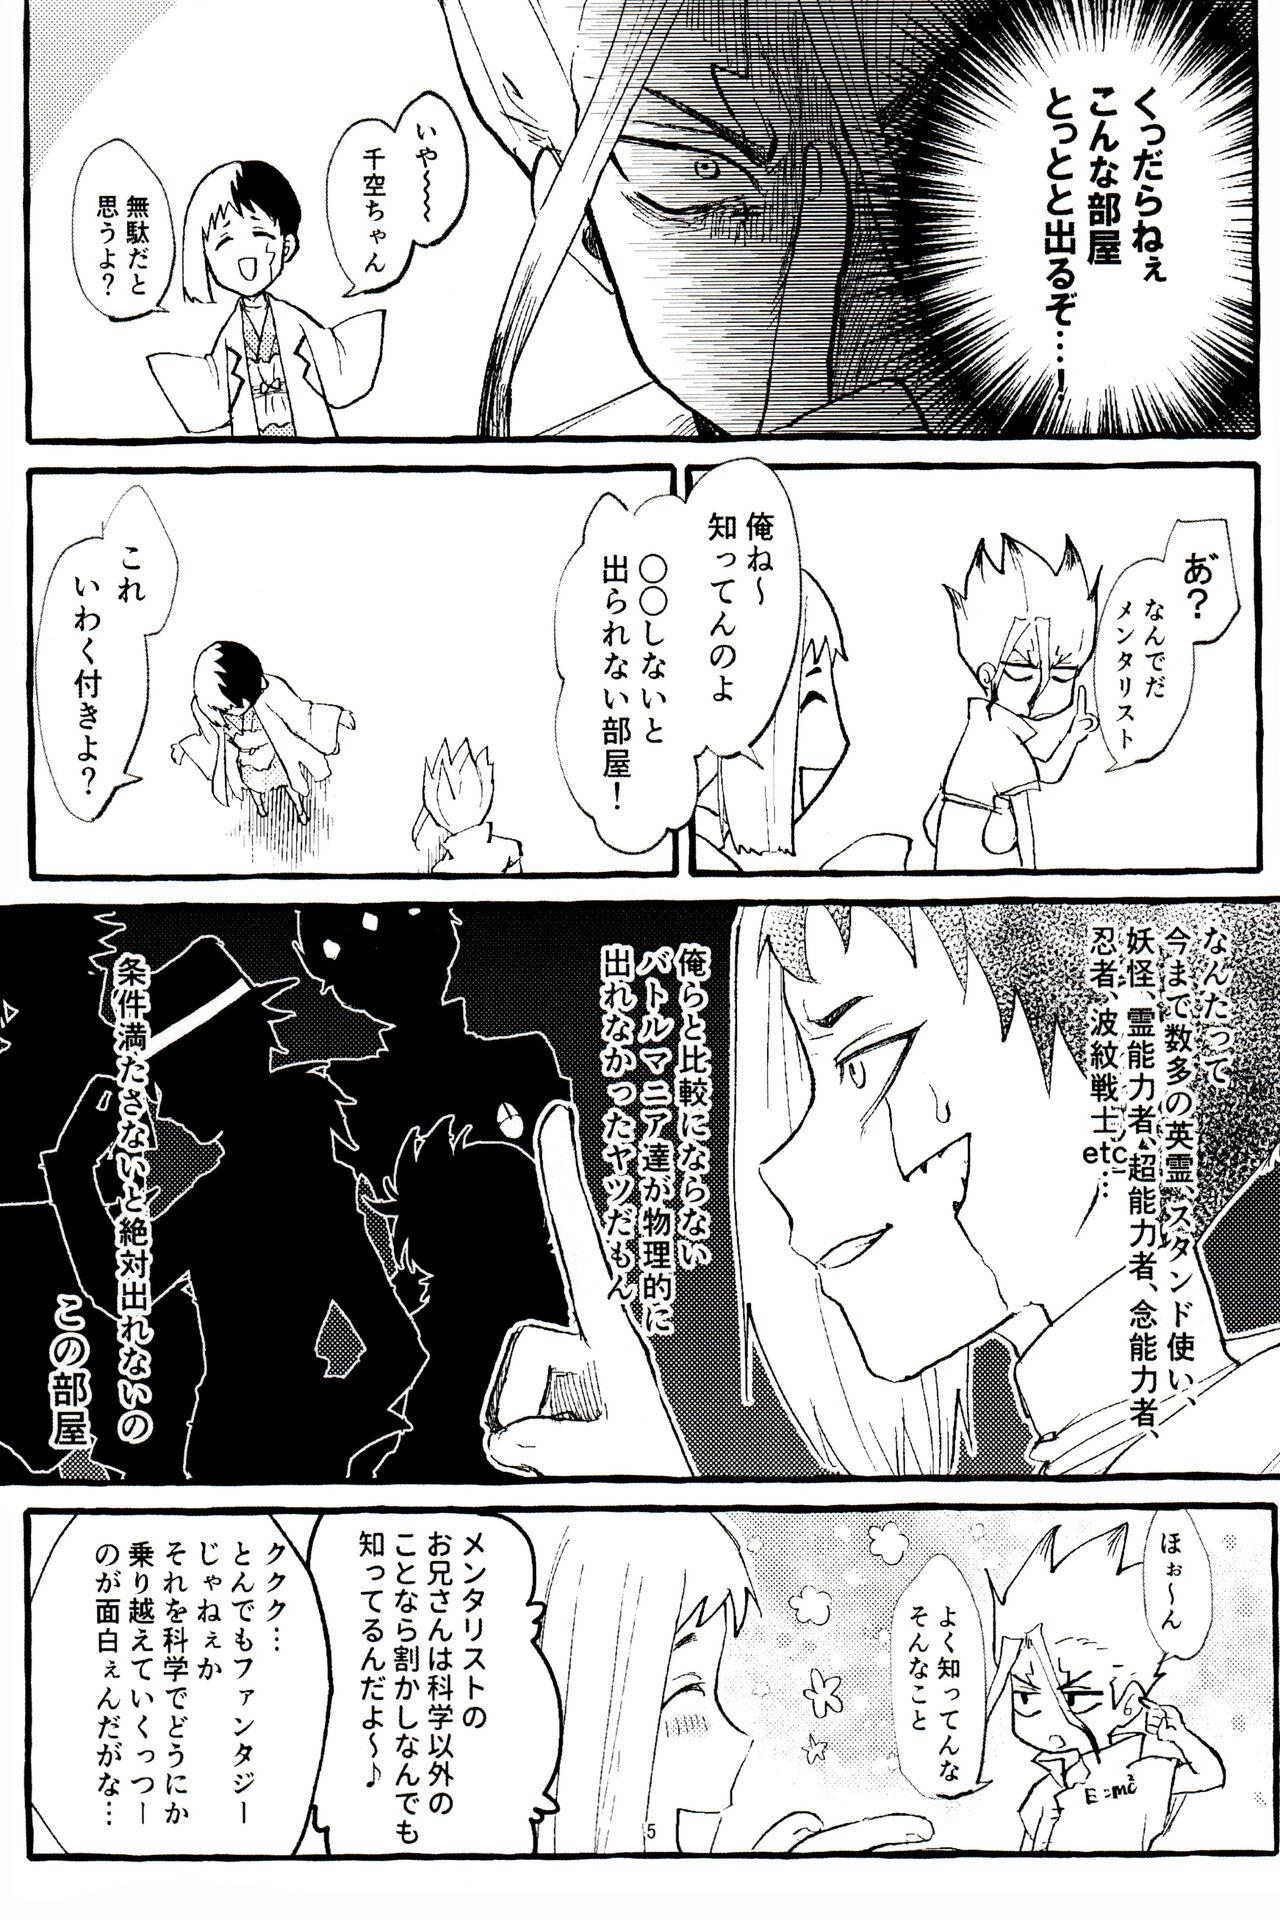 Chubby ××× Shinai to de rarenai heya - Dr. stone Cdmx - Page 5